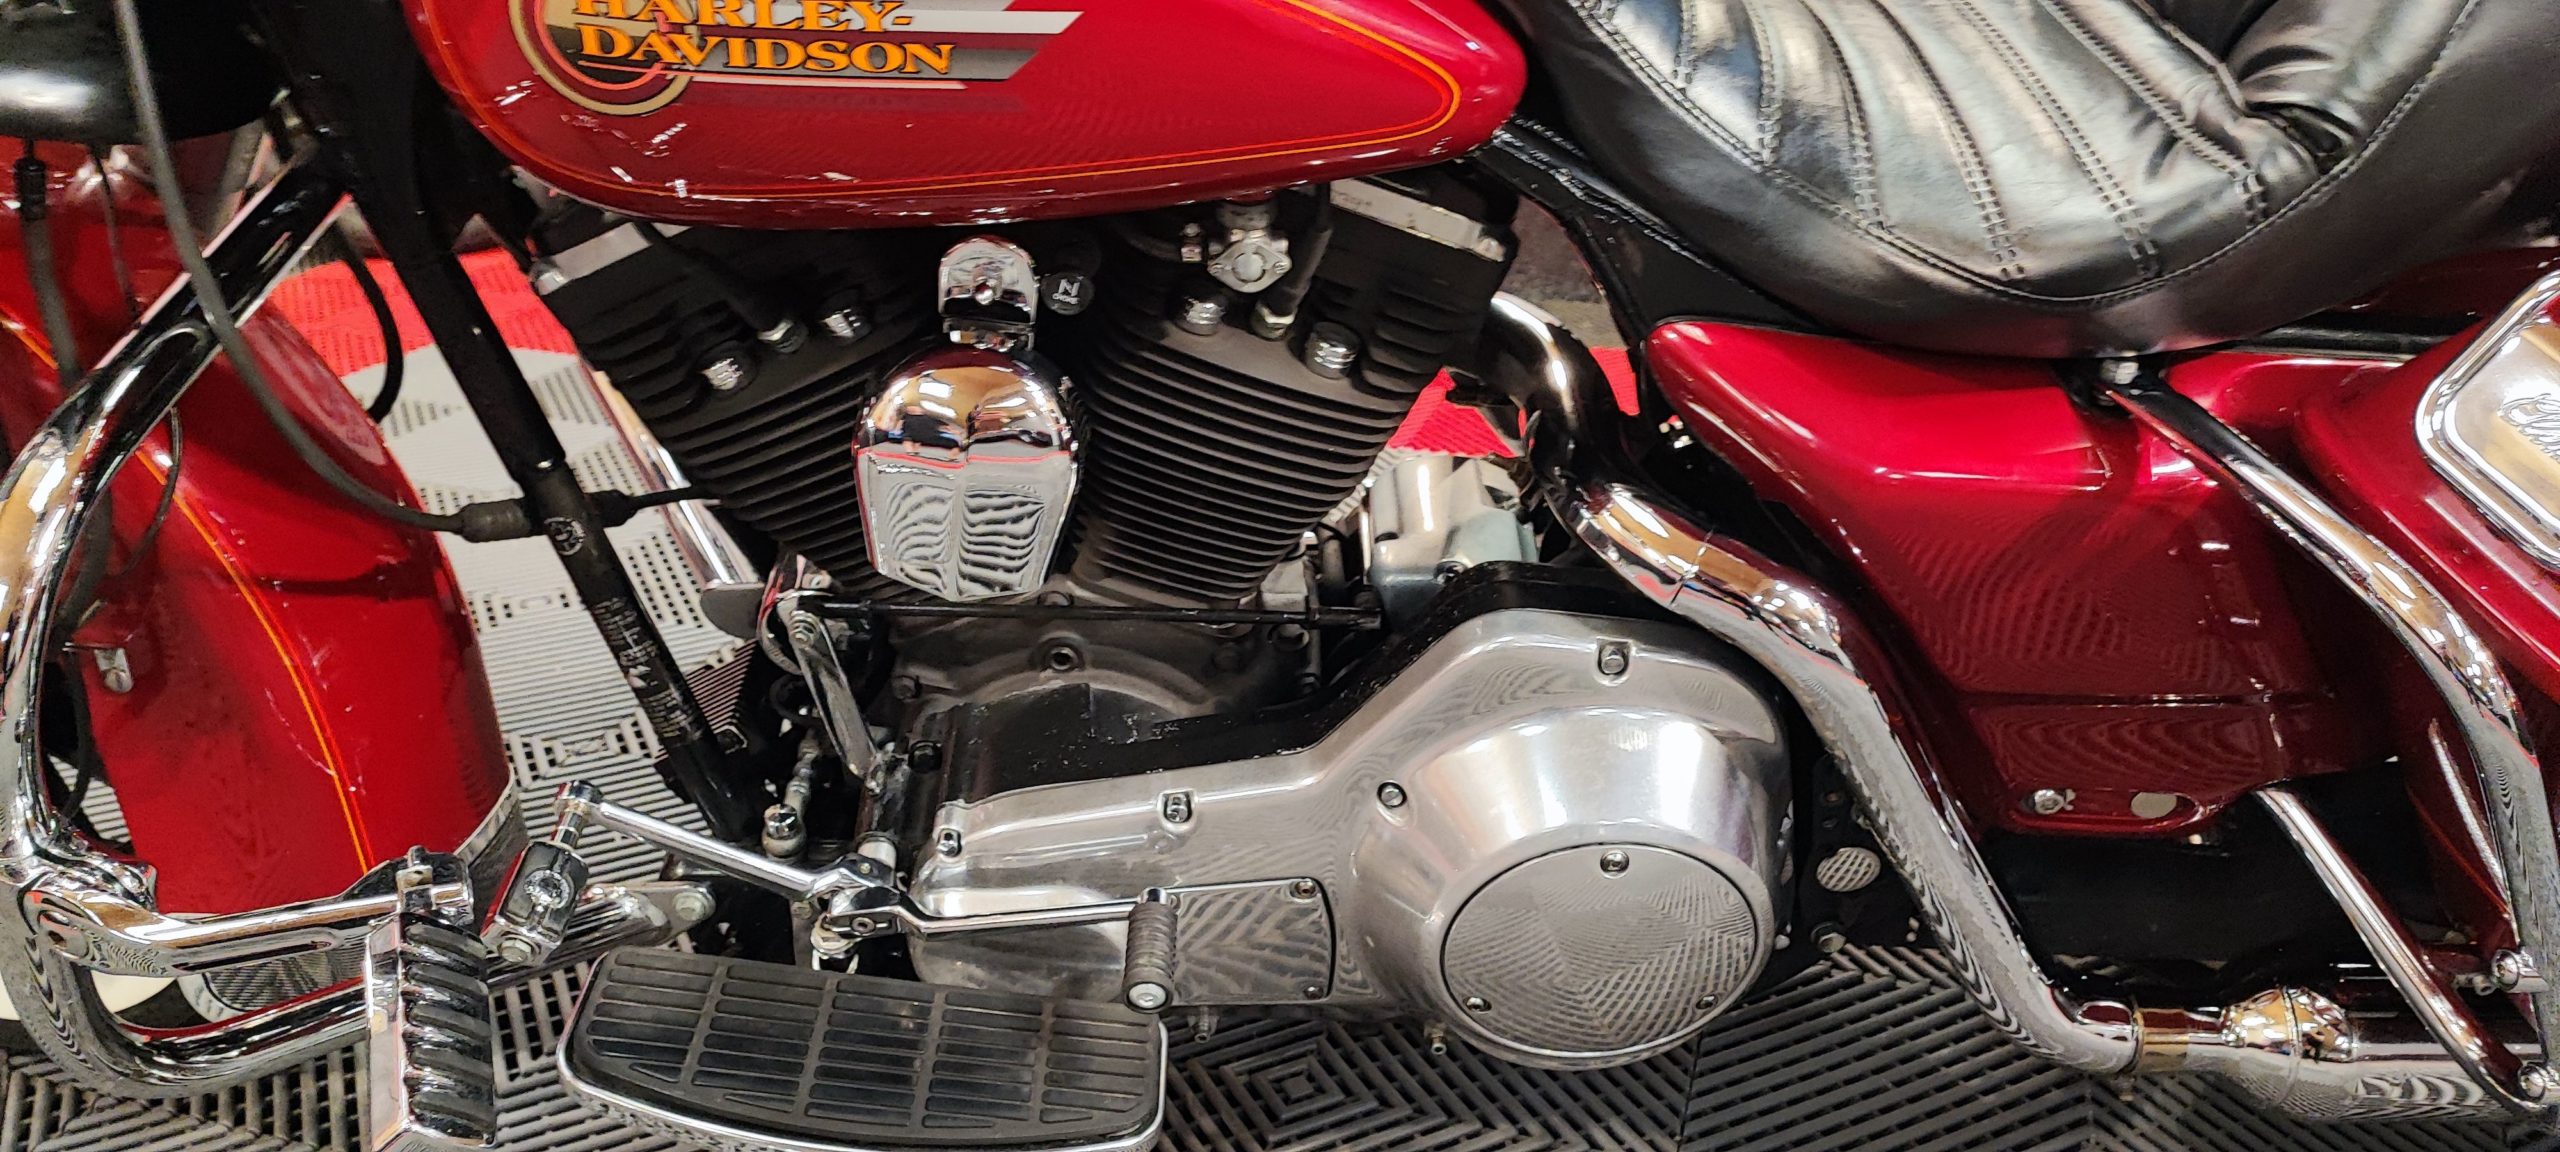 Harley Davidson FLHS – 1993